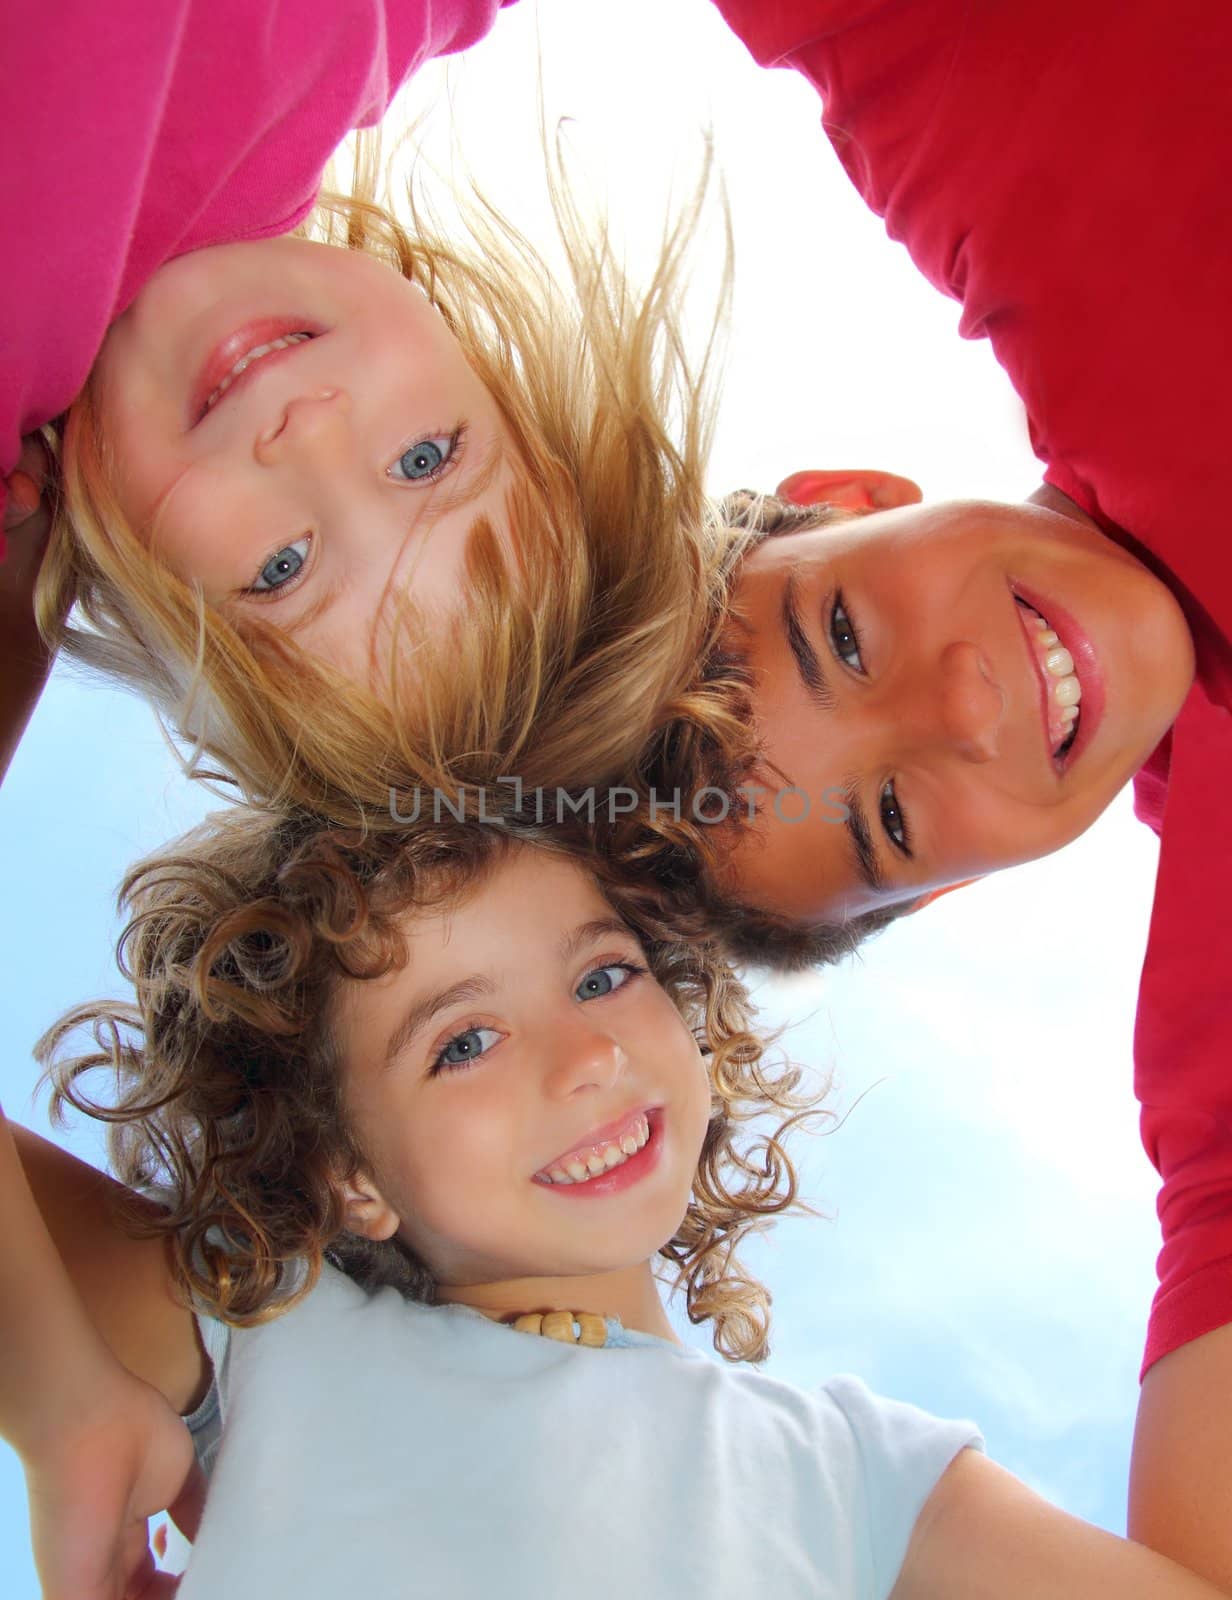 Below view of happy three children embracing by lunamarina